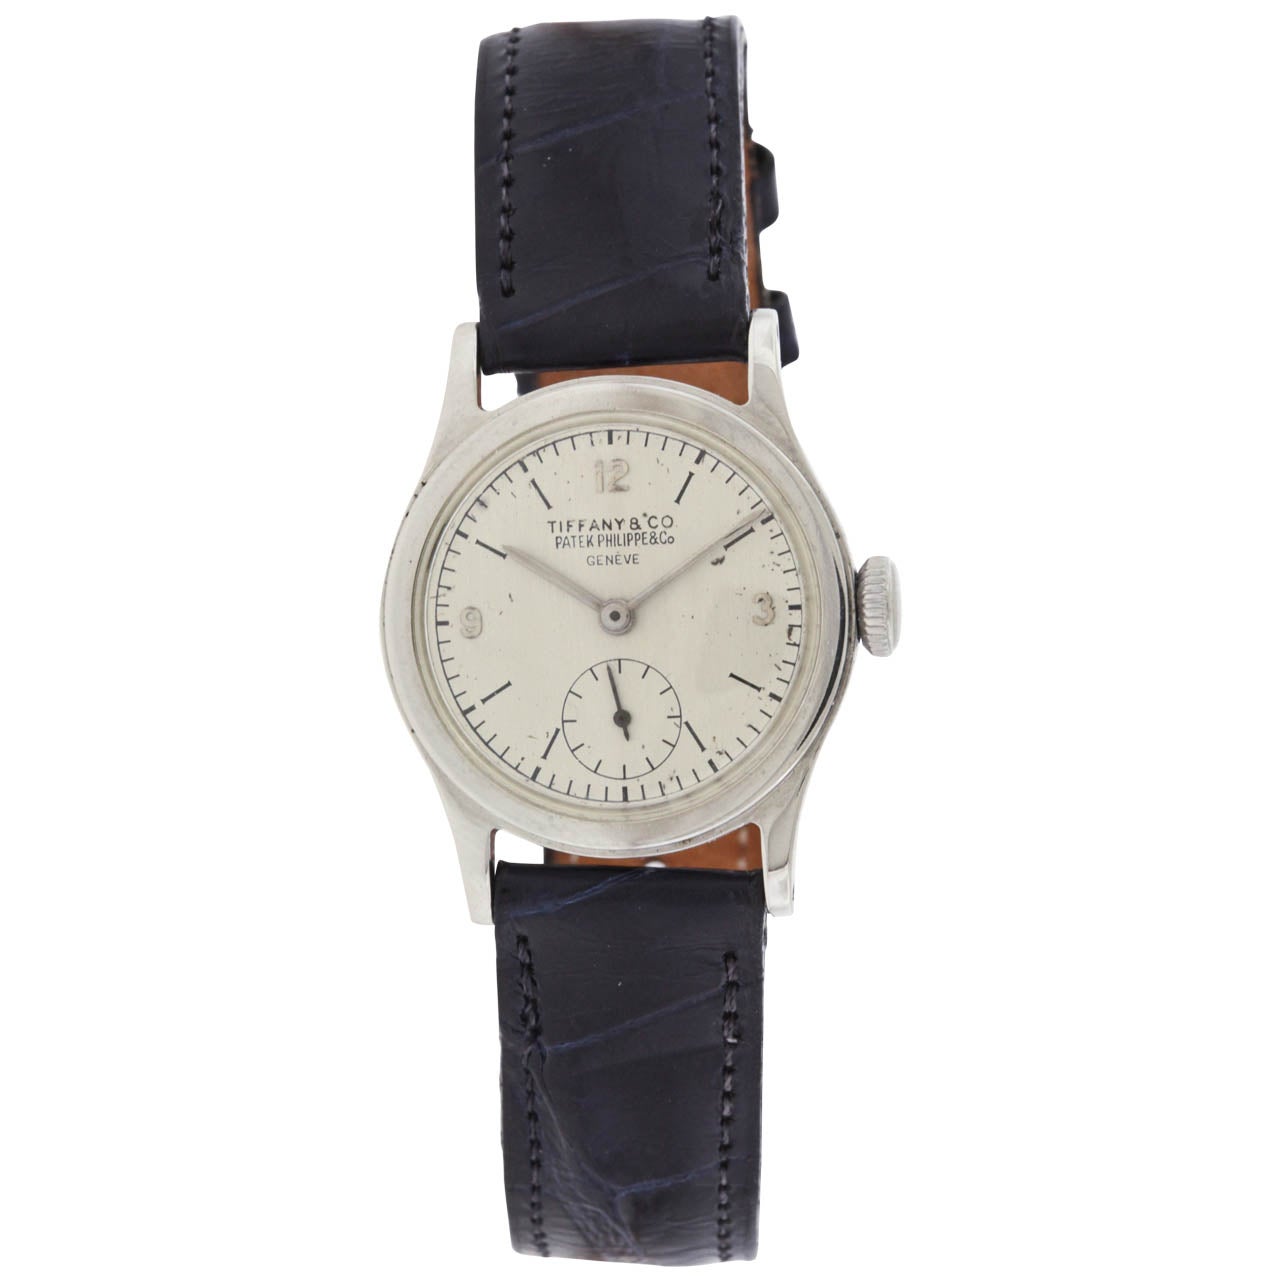 Patek Philippe Stainless Steel Calatrava Wristwatch Retailed by Tiffany & Co.